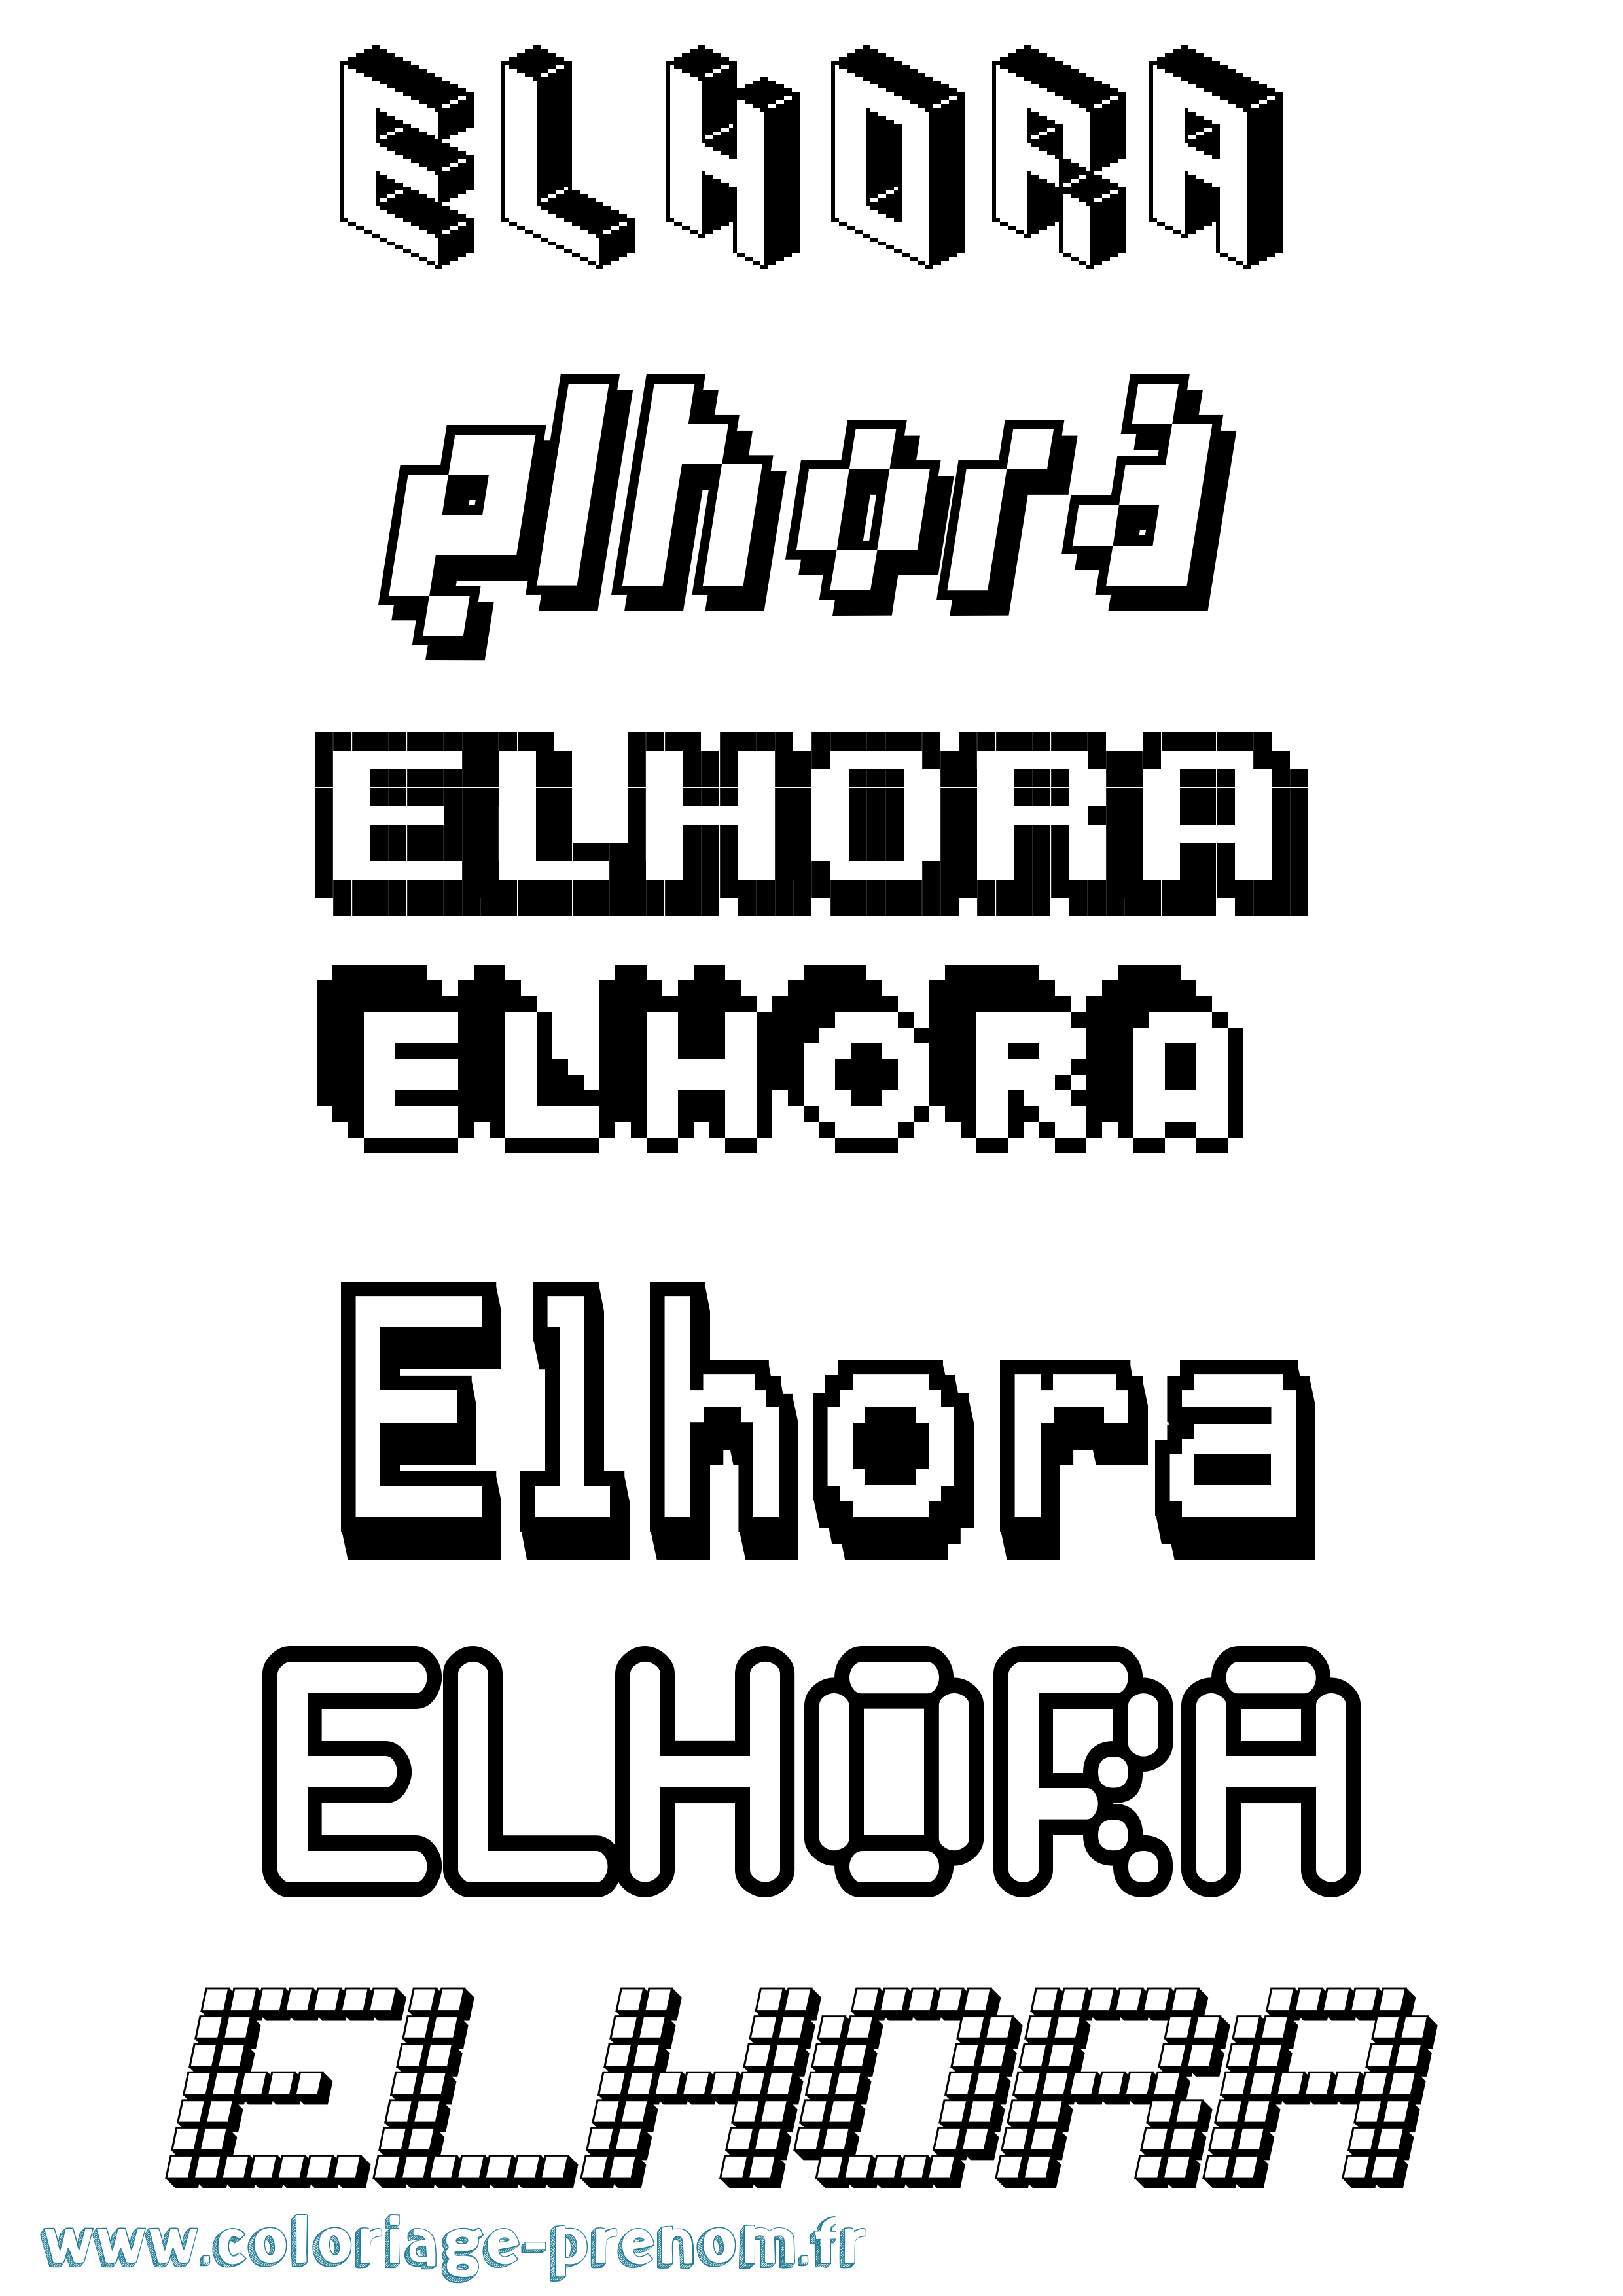 Coloriage prénom Elhora Pixel